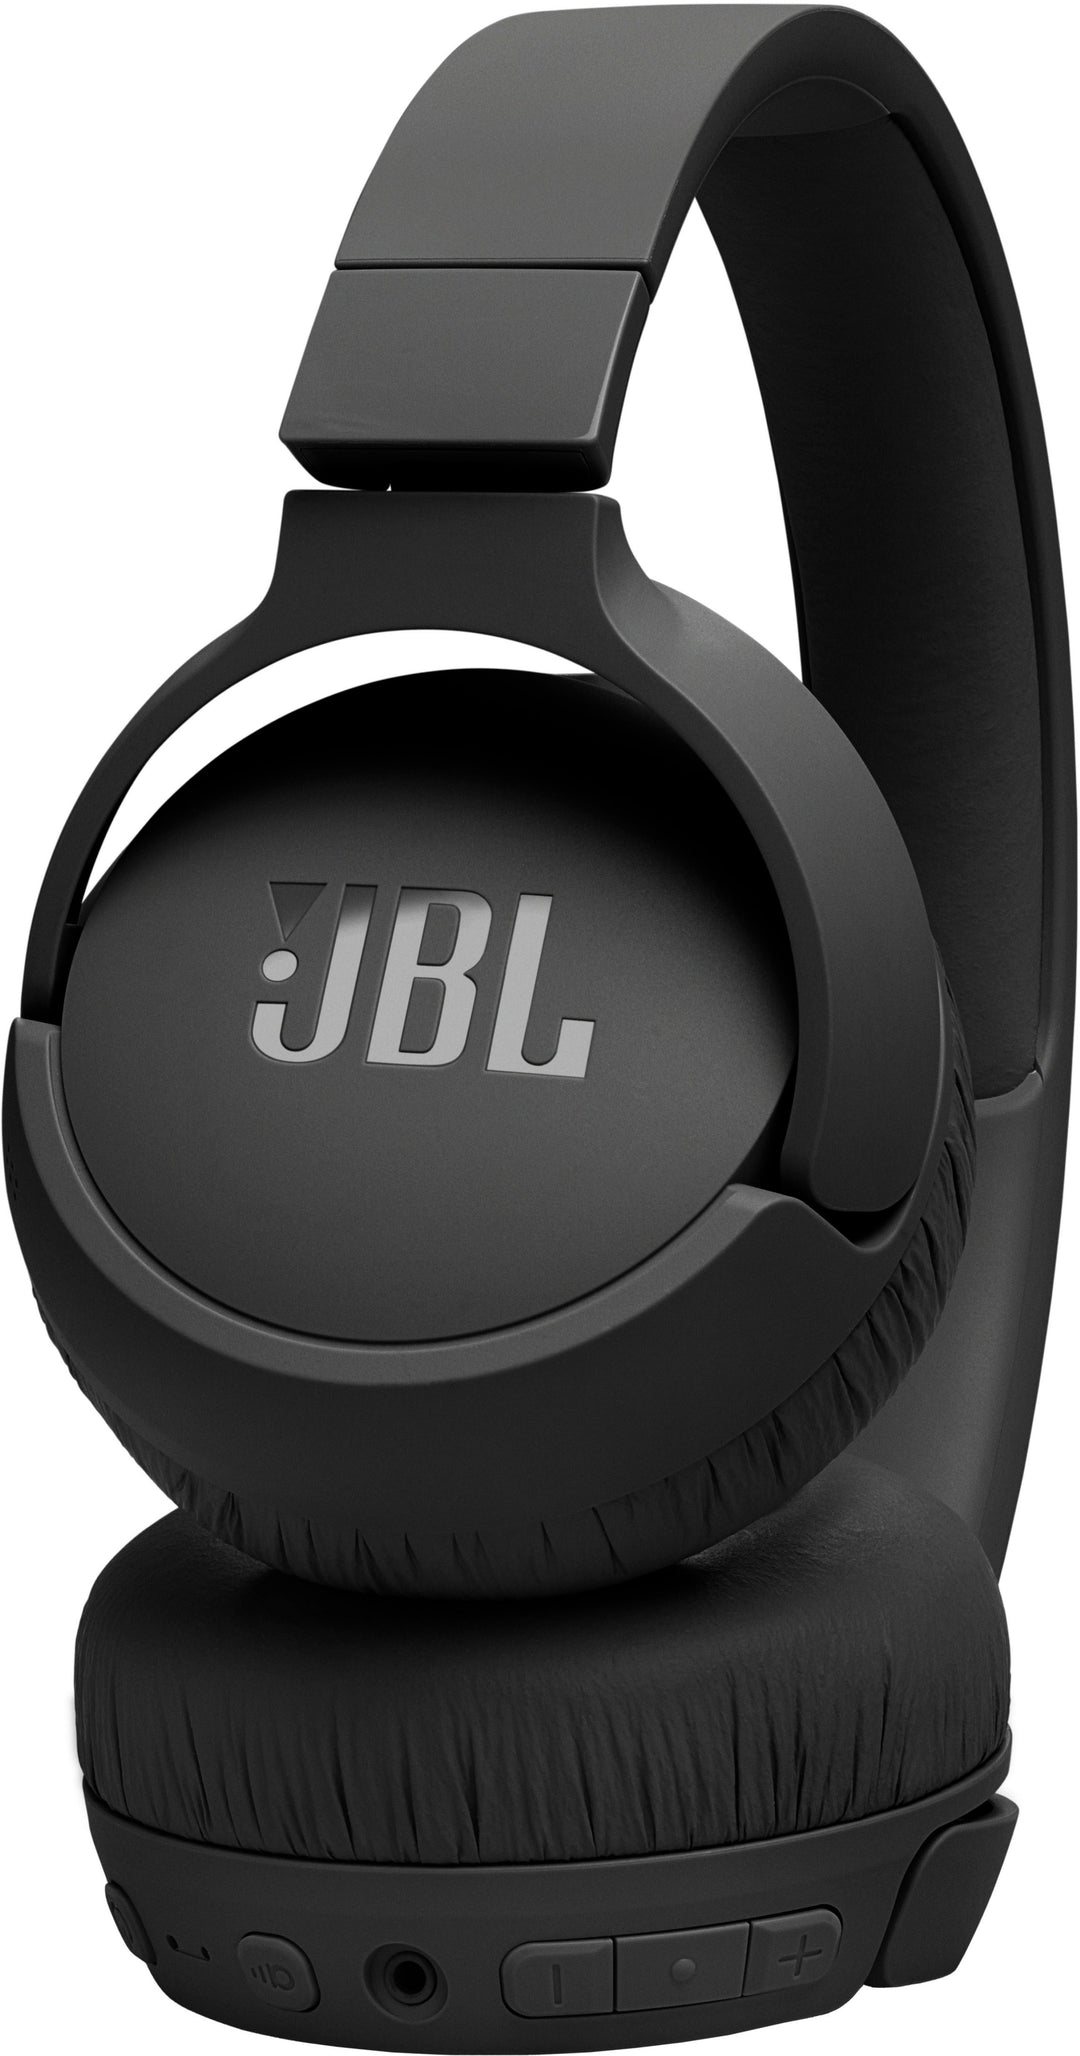 JBL - Adaptive Noise Cancelling Wireless On-Ear Headphone - Black_4